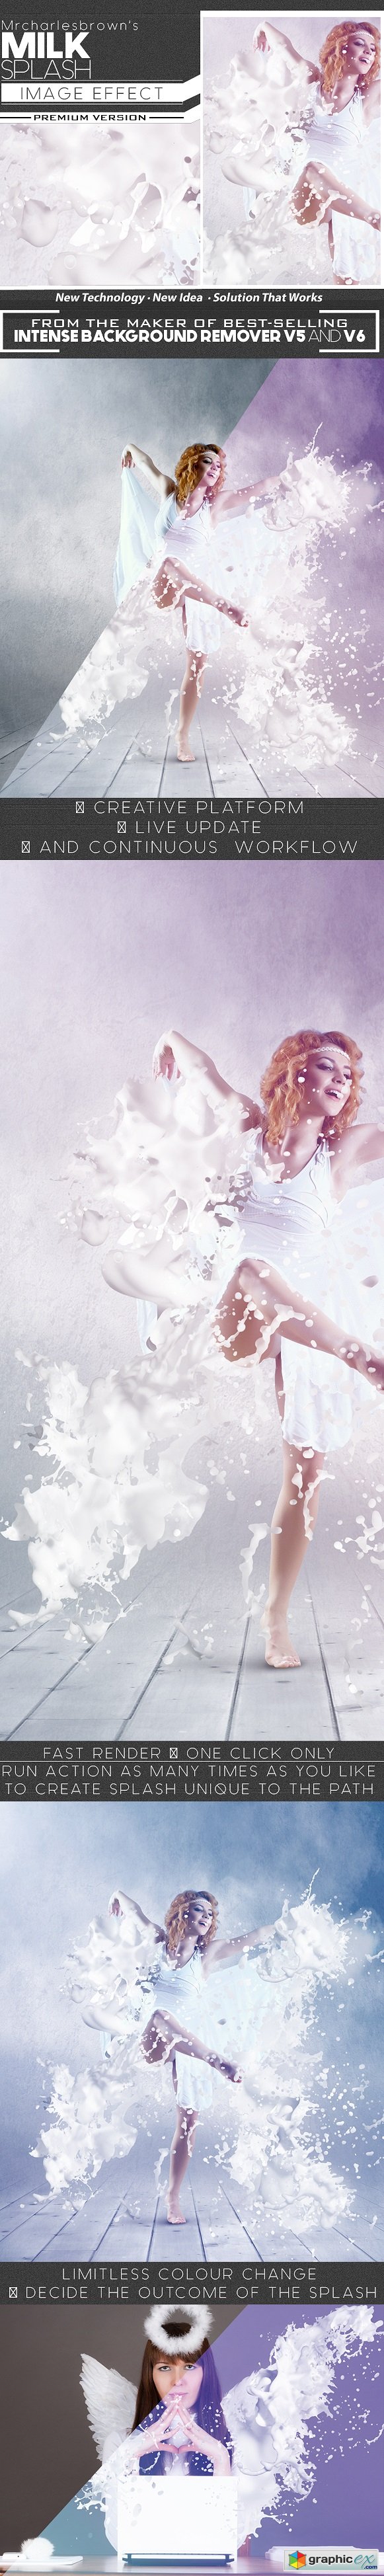 Milk Splash Image Effect